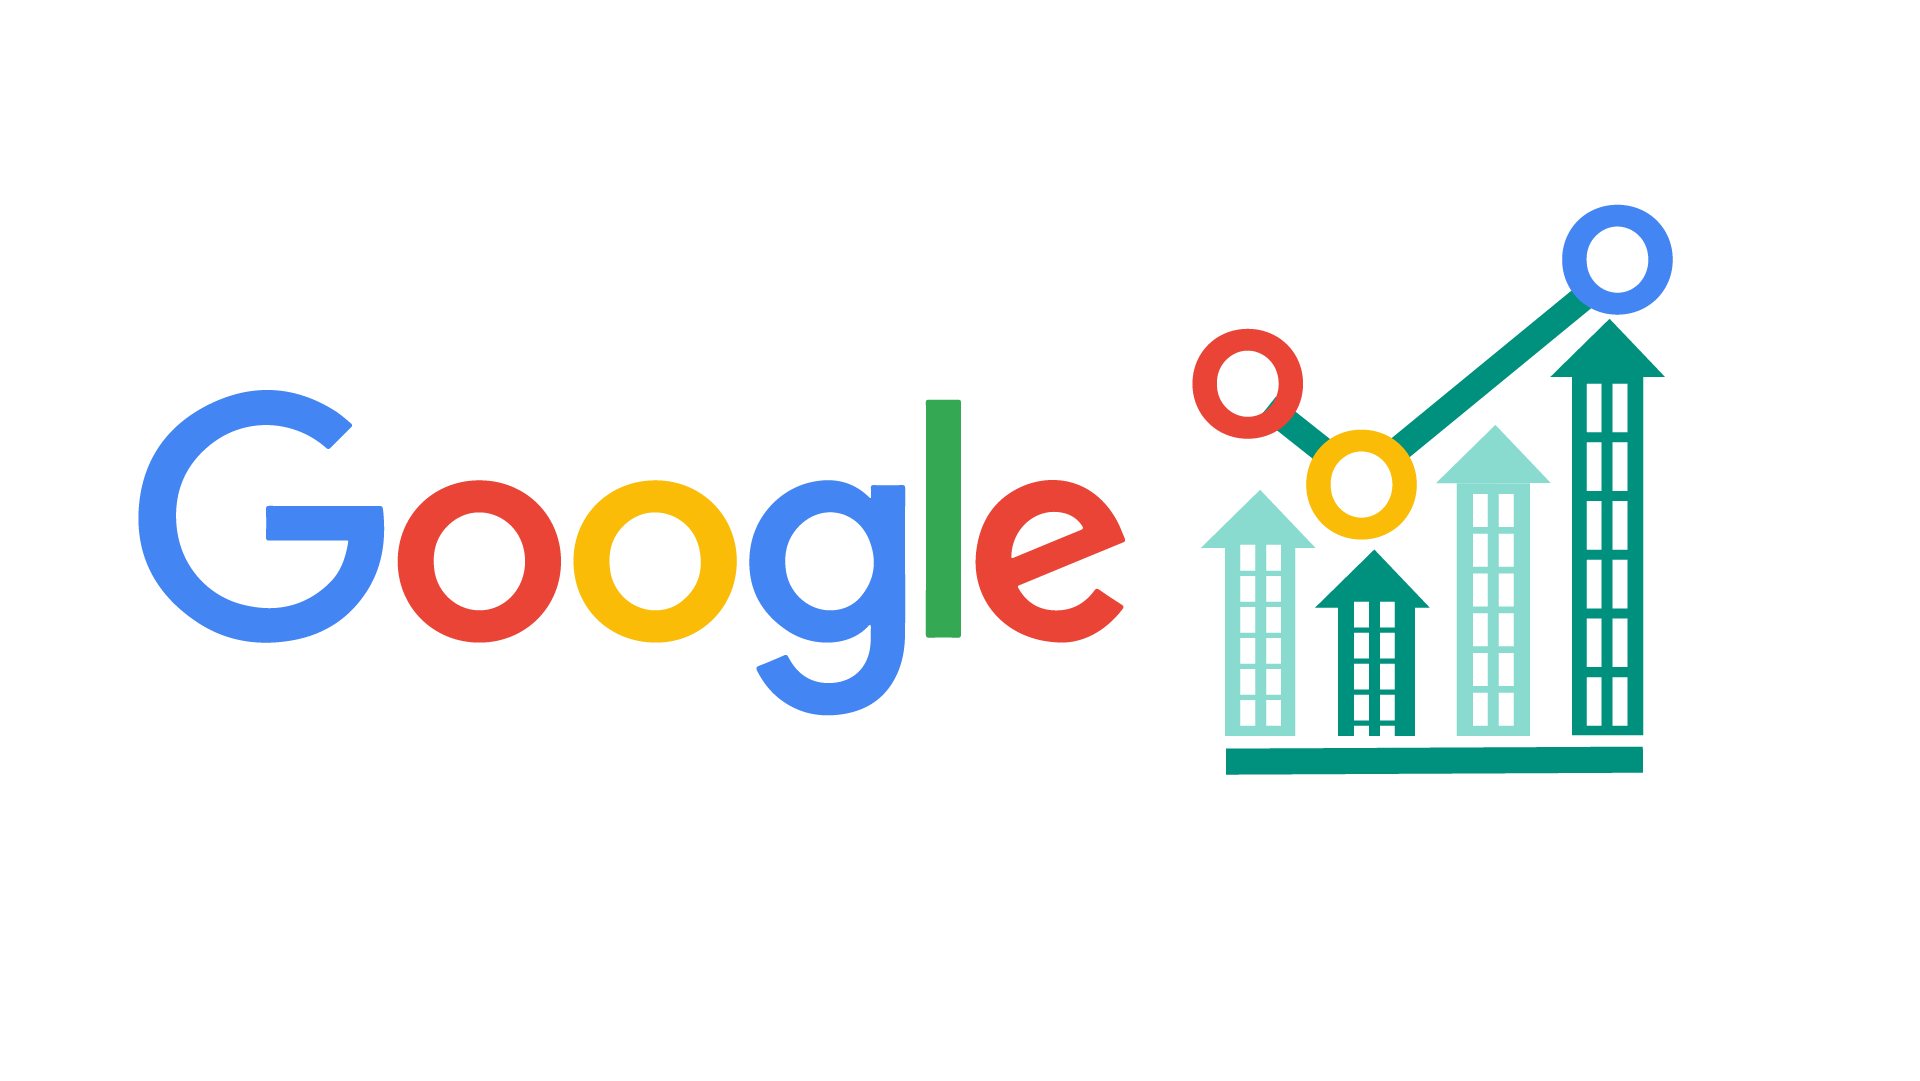 Google business